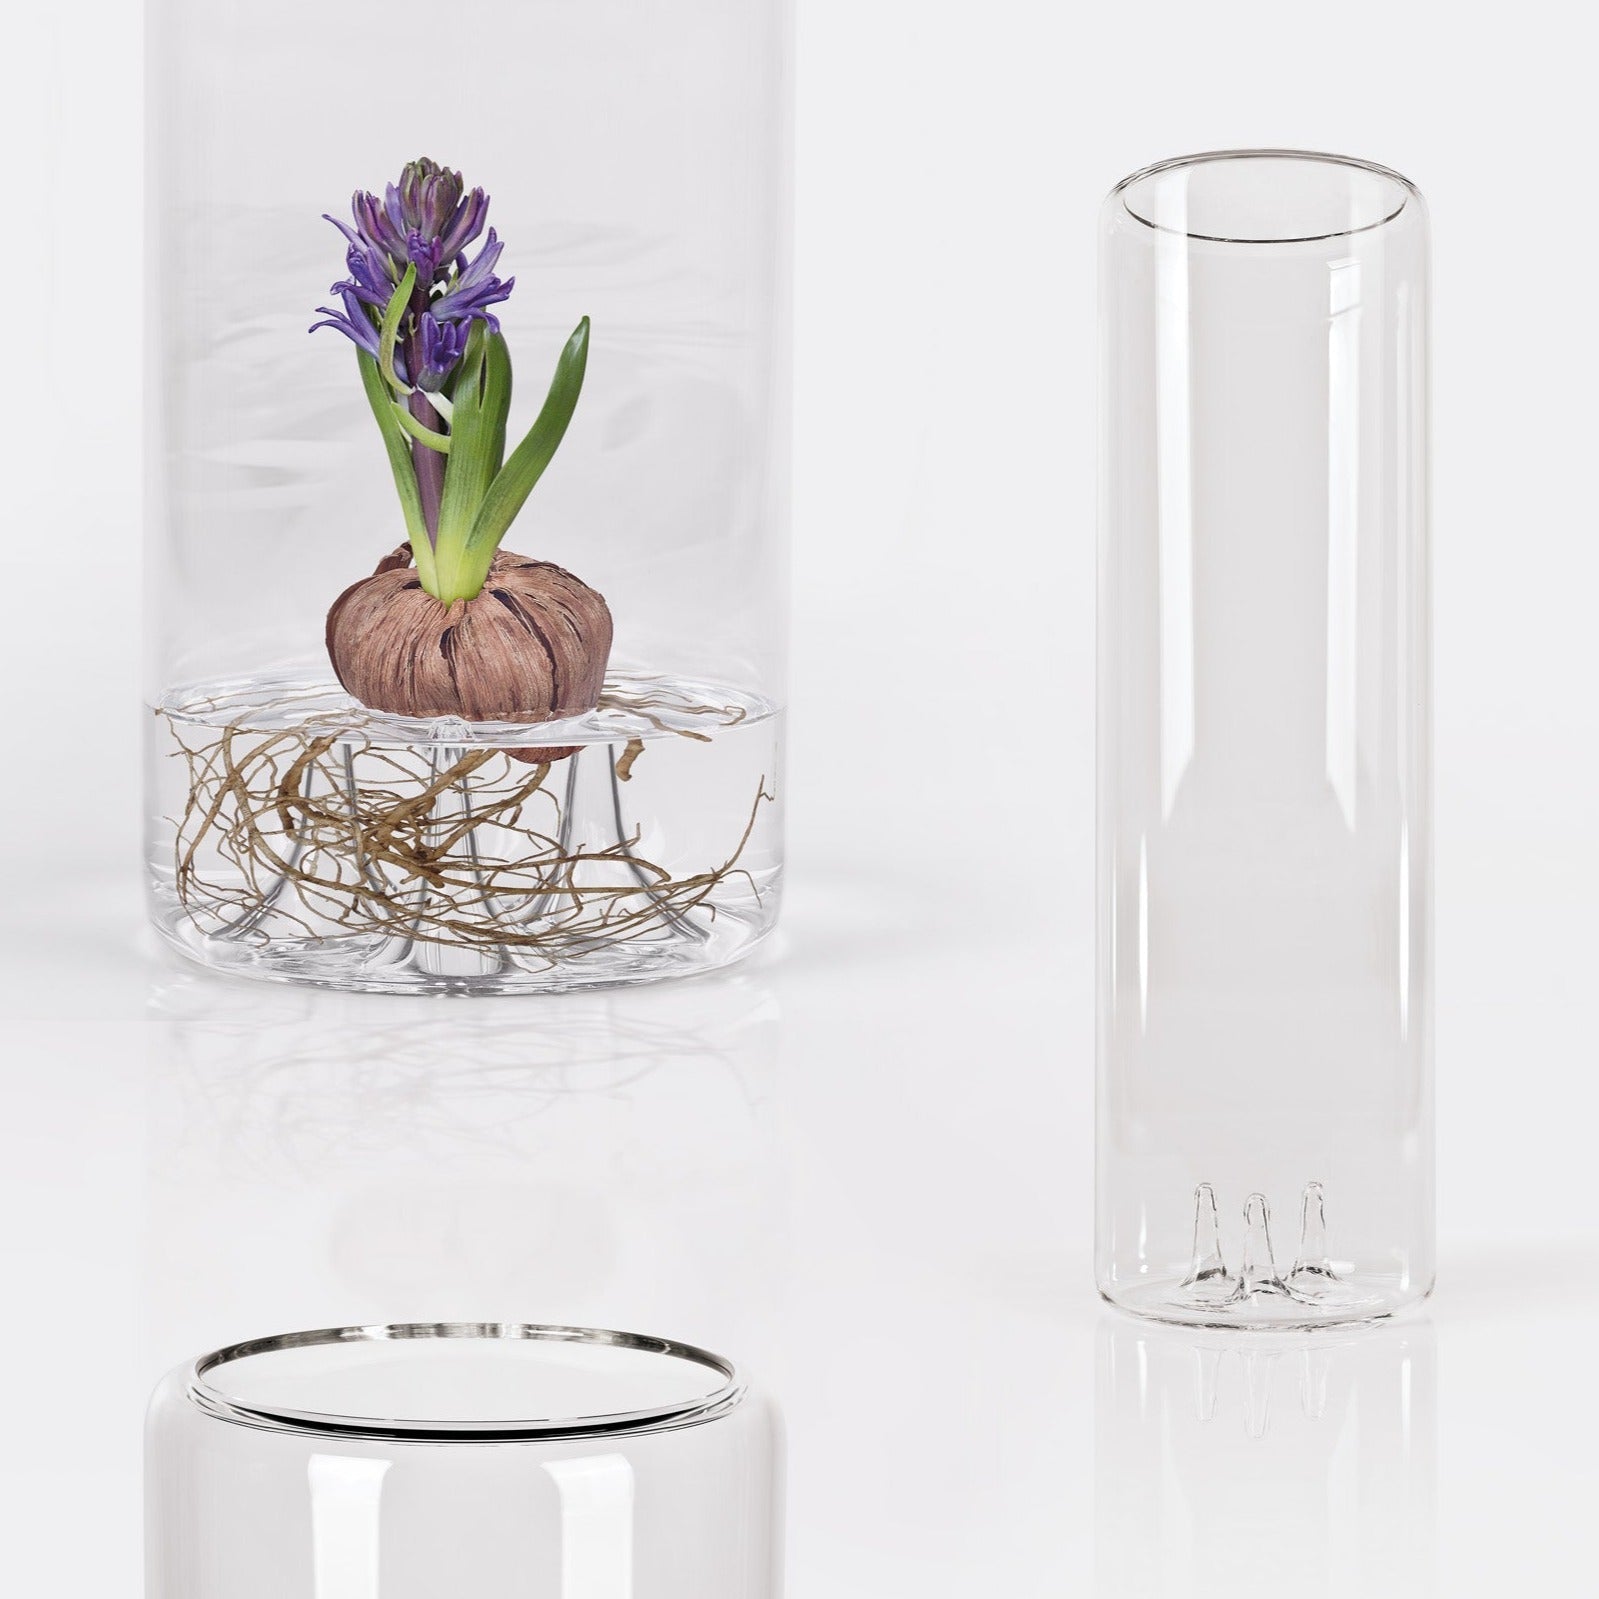 Benia, vaso in vetro per crescita bulbi